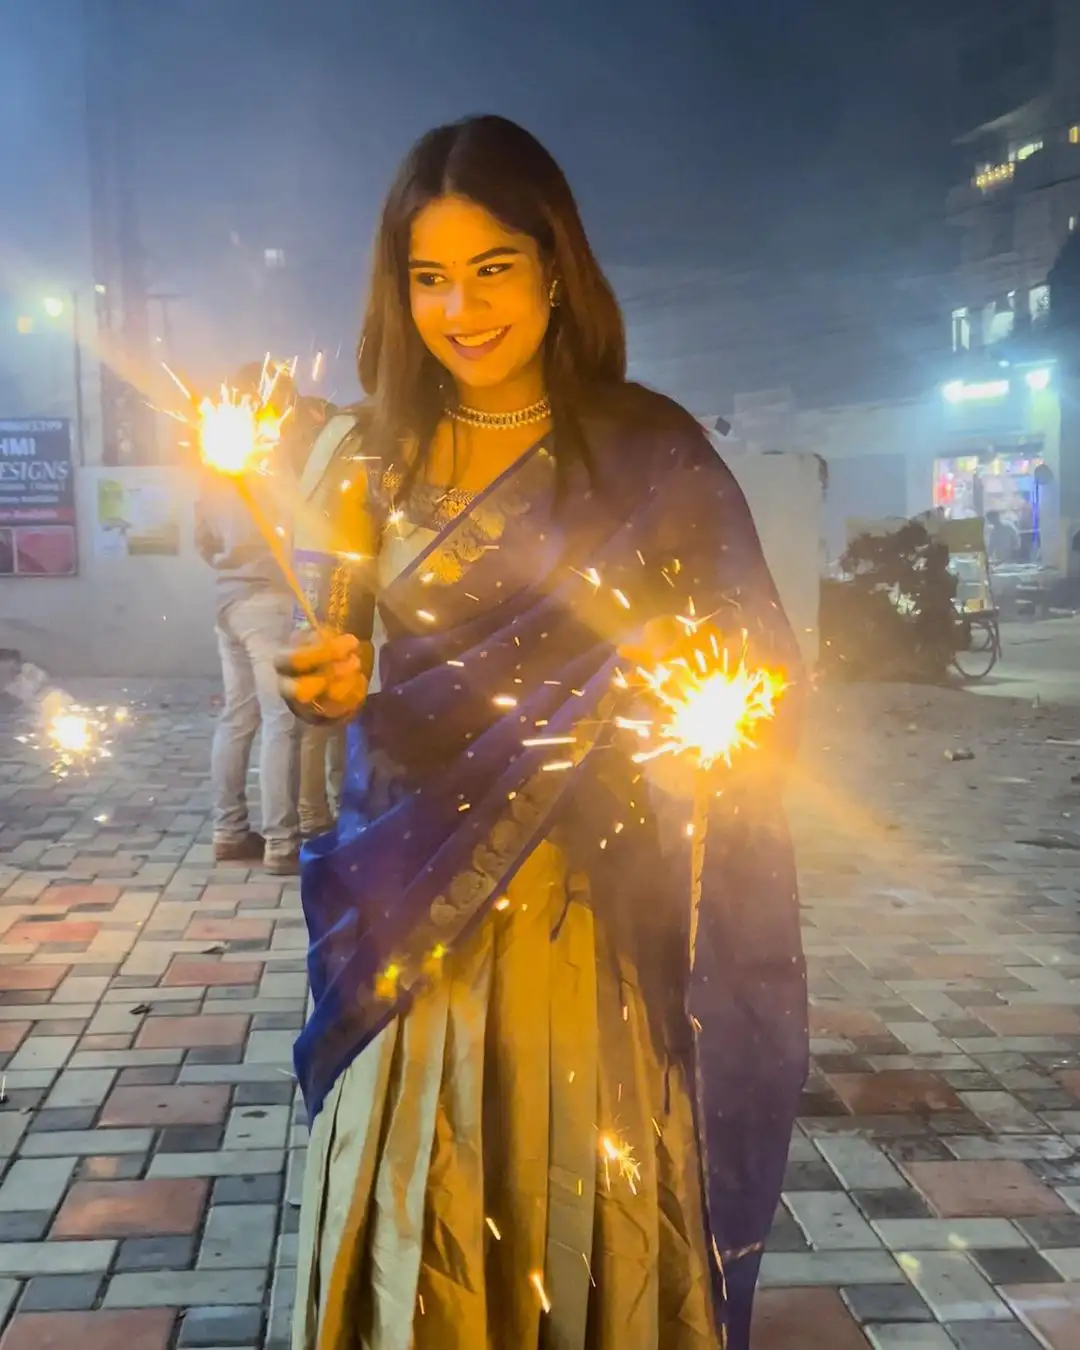 Swetha naidu Diwali Celebrations with Family 